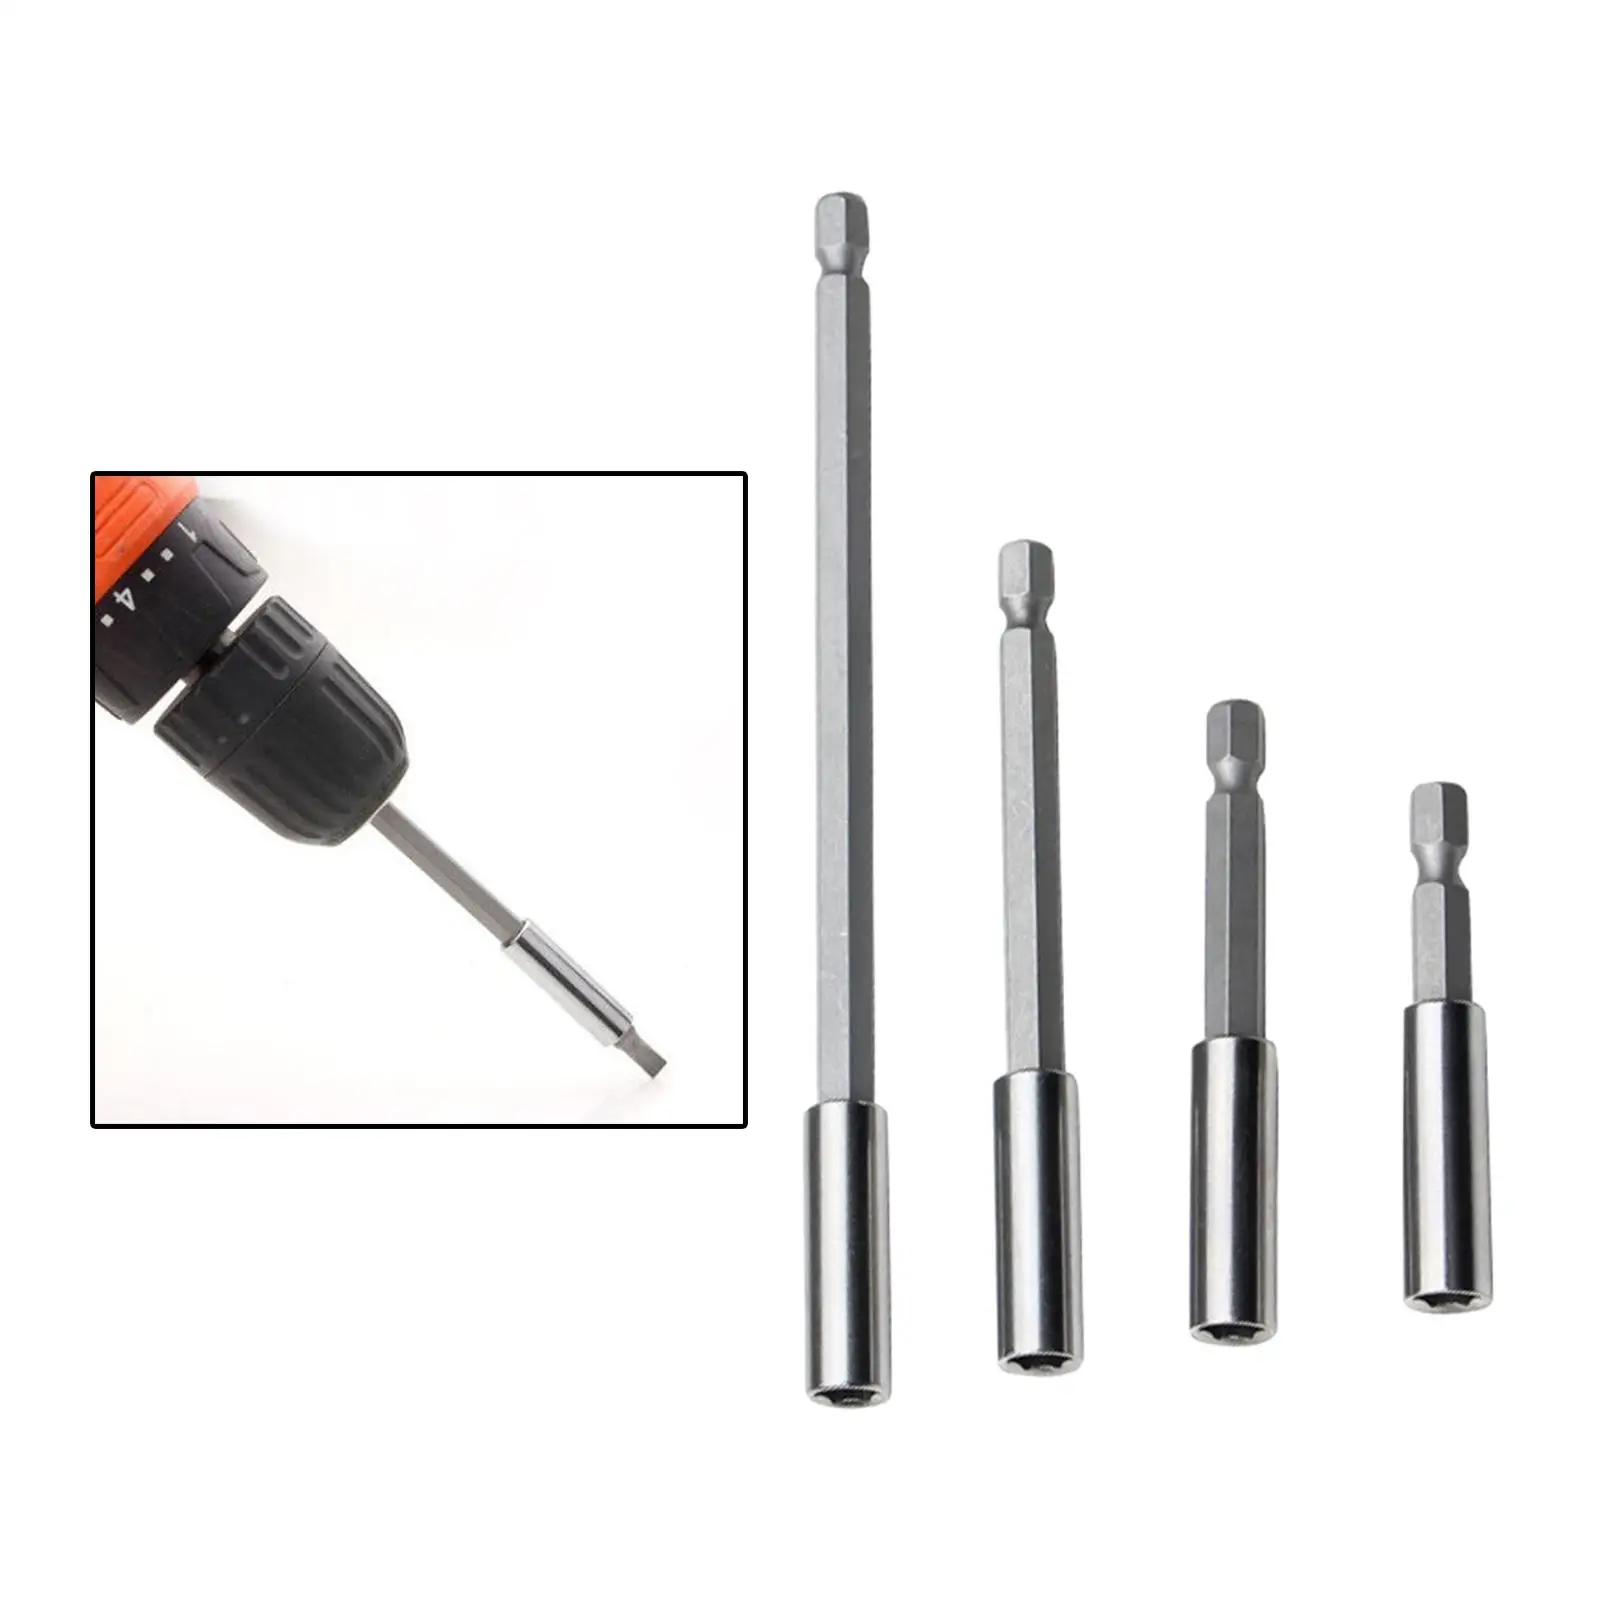 Screwdriver Head Extension Rod Socket Adapter Adapter Extension Sleeve Extension Rod for Cordless Drill Pneumatic Air Batch